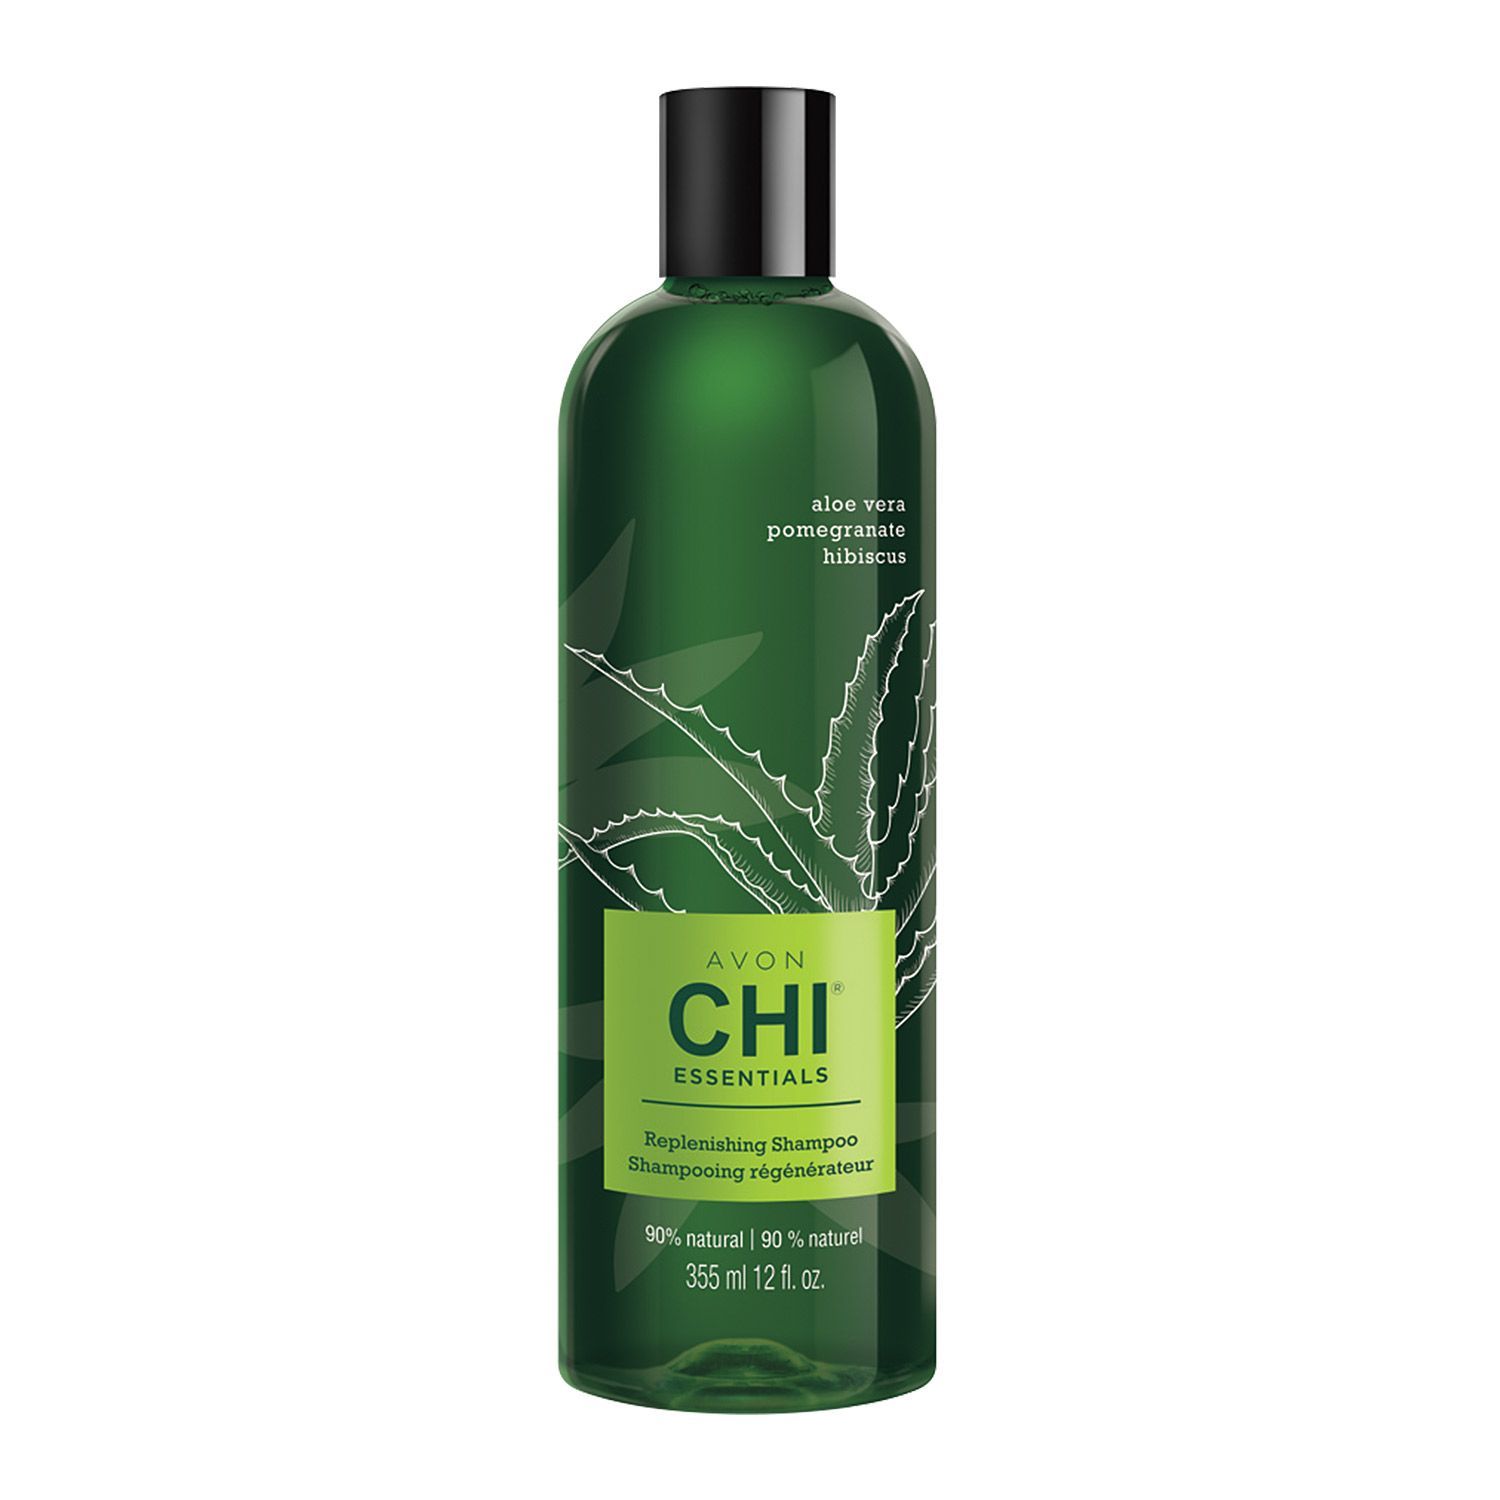 Avon CHI Essentials Replenishing Shampoo